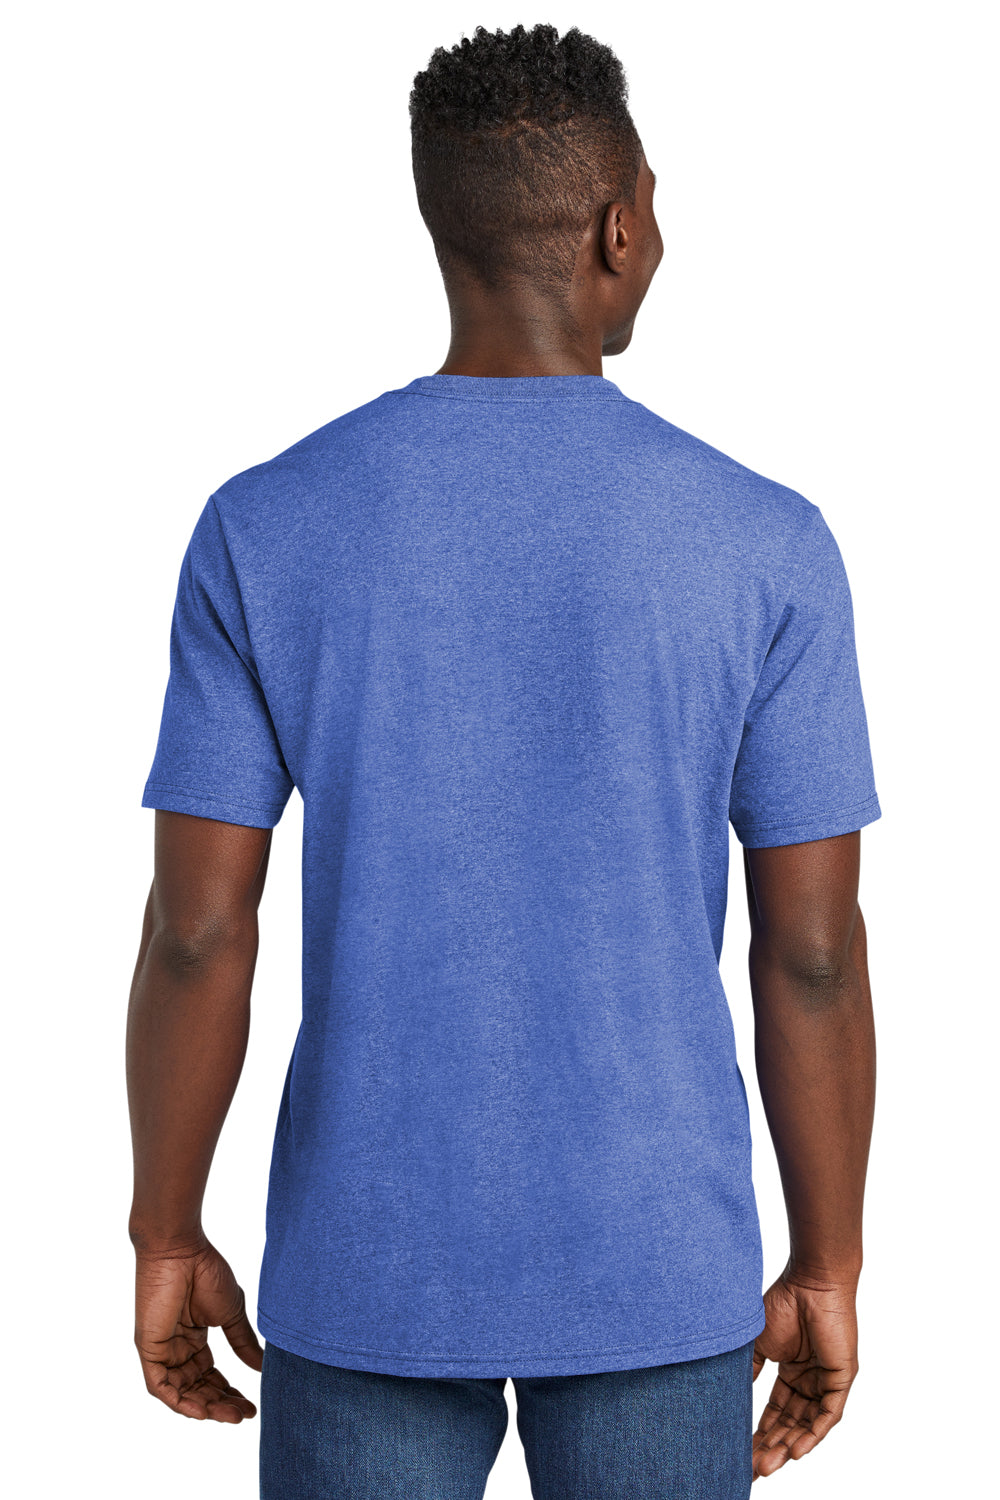 Allmade AL2300 Mens Recycled Short Sleeve Crewneck T-Shirt Heather Royal Blue Model Back